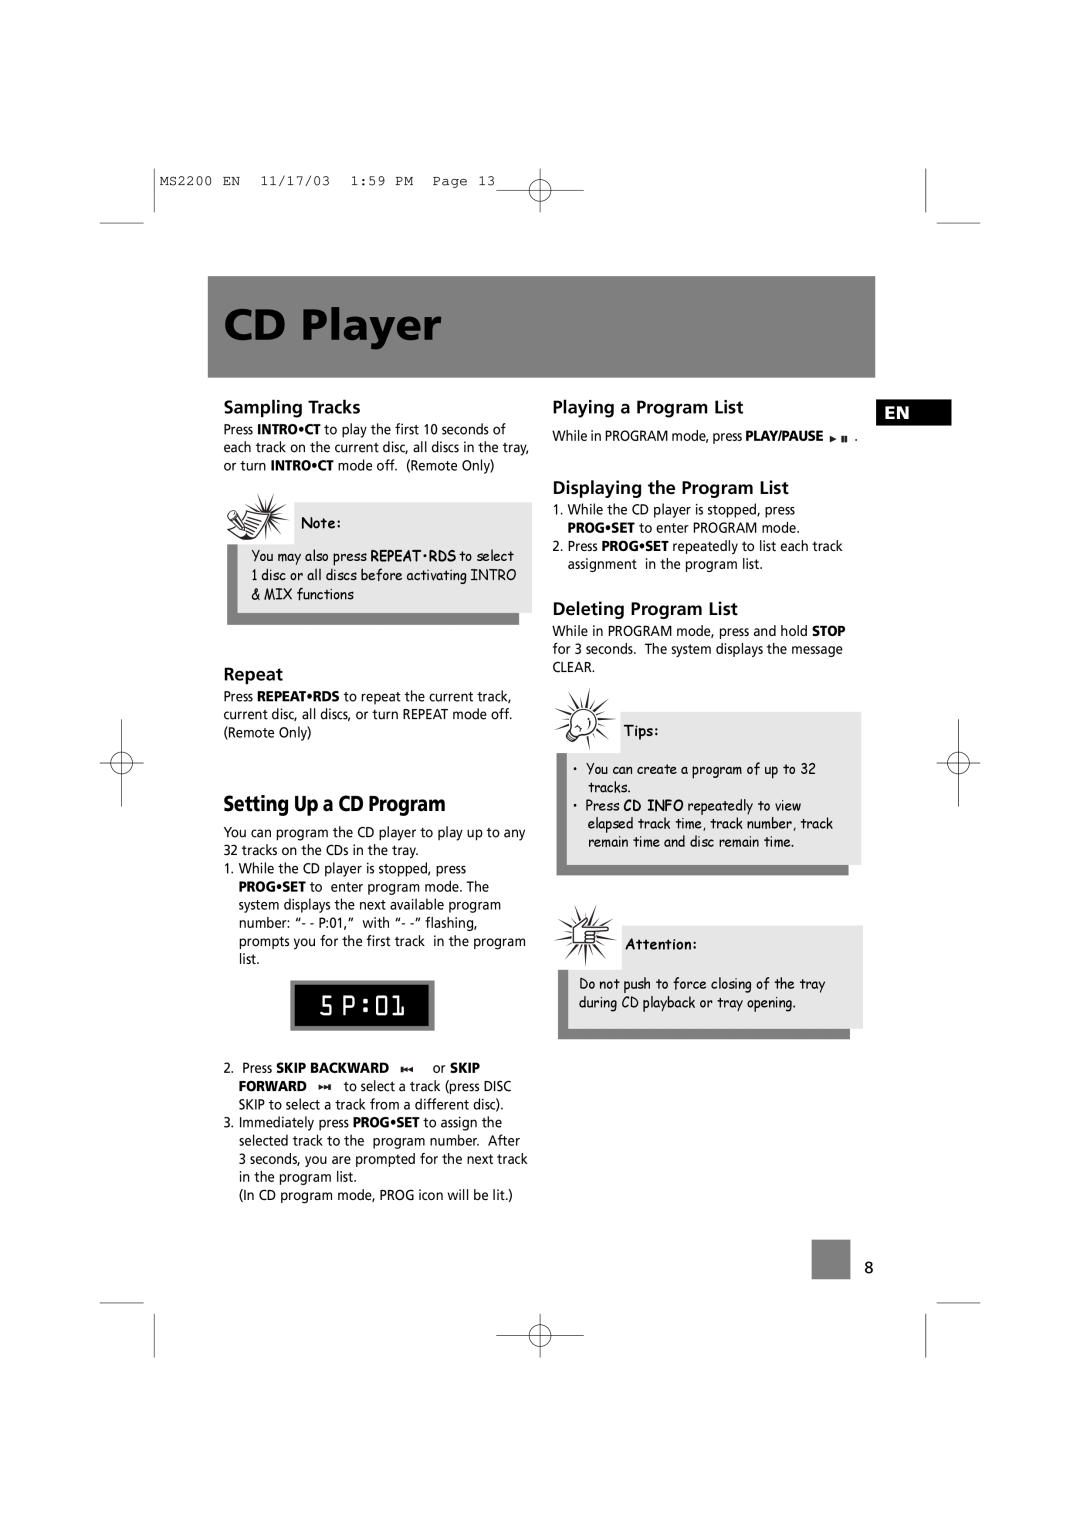 Technicolor - Thomson MS2200 manual 5 P, Setting Up a CD Program, CD Player, Press SKIP BACKWARD, or SKIP, Forward, Tips 